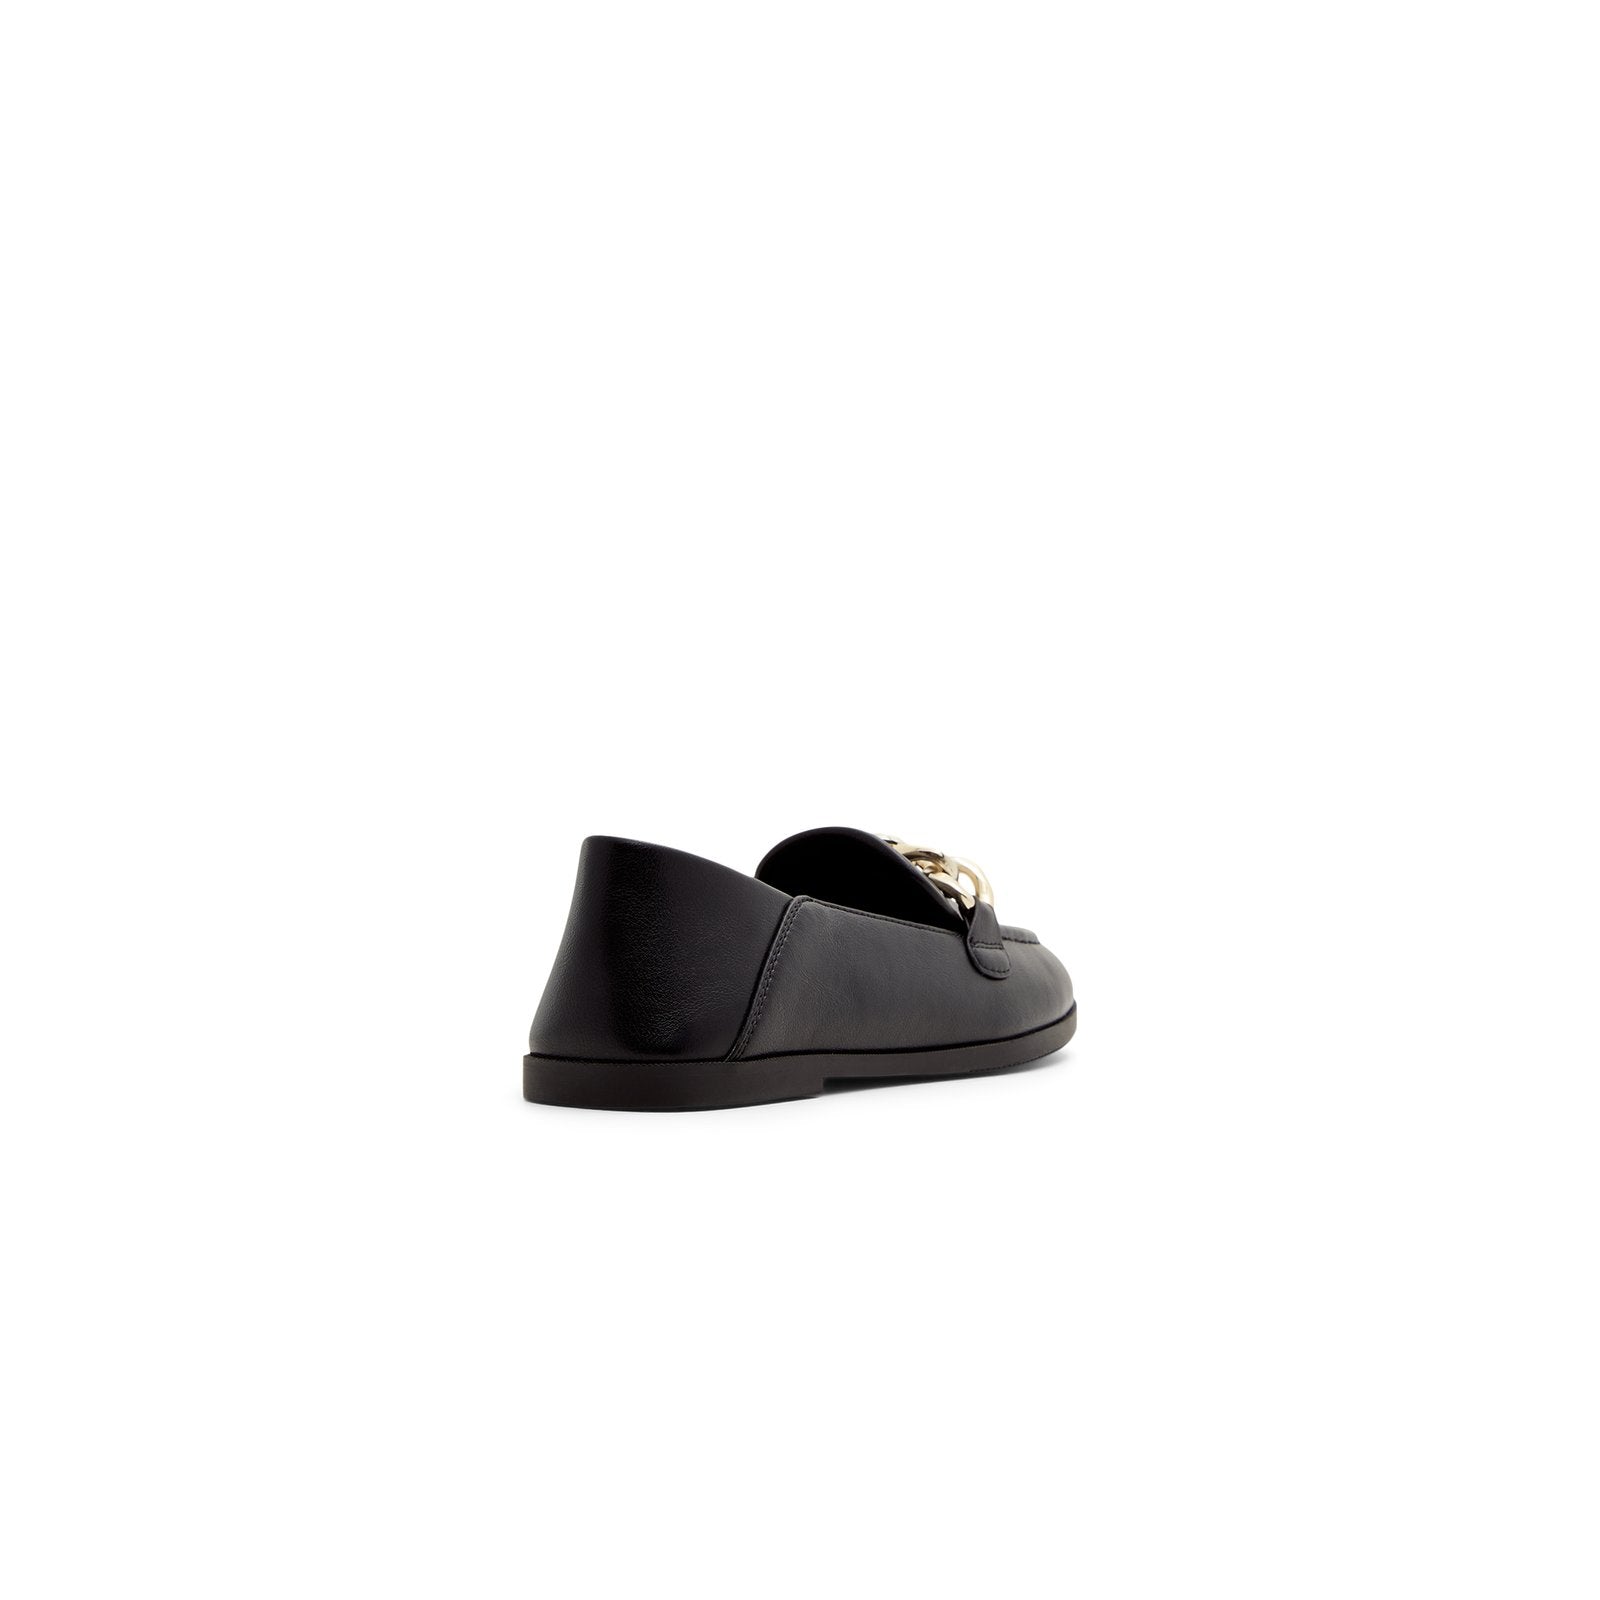 Torii / Loafers Women Shoes - Black - CALL IT SPRING KSA